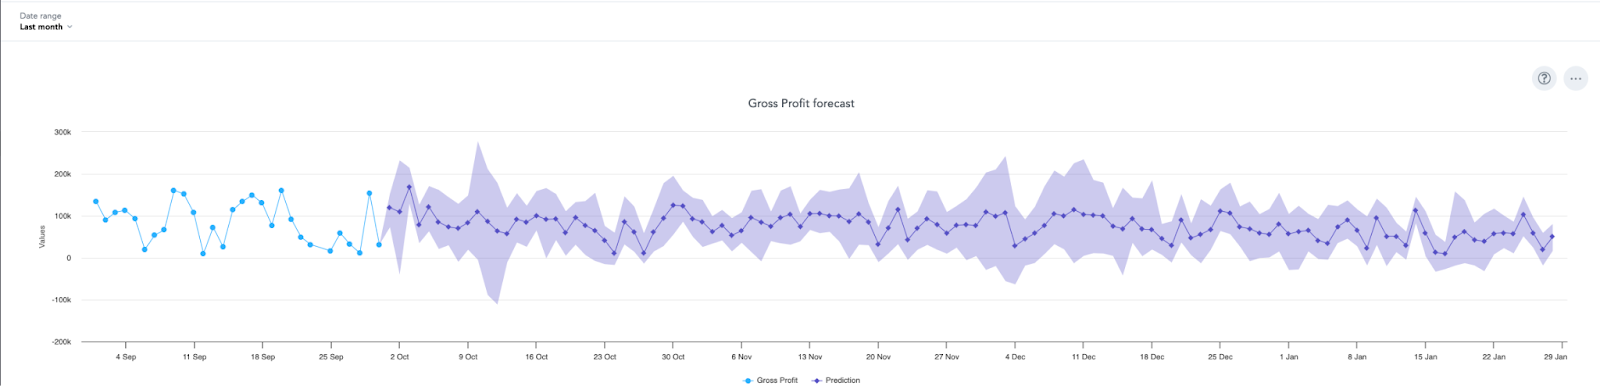 Gross profit graph gooddata